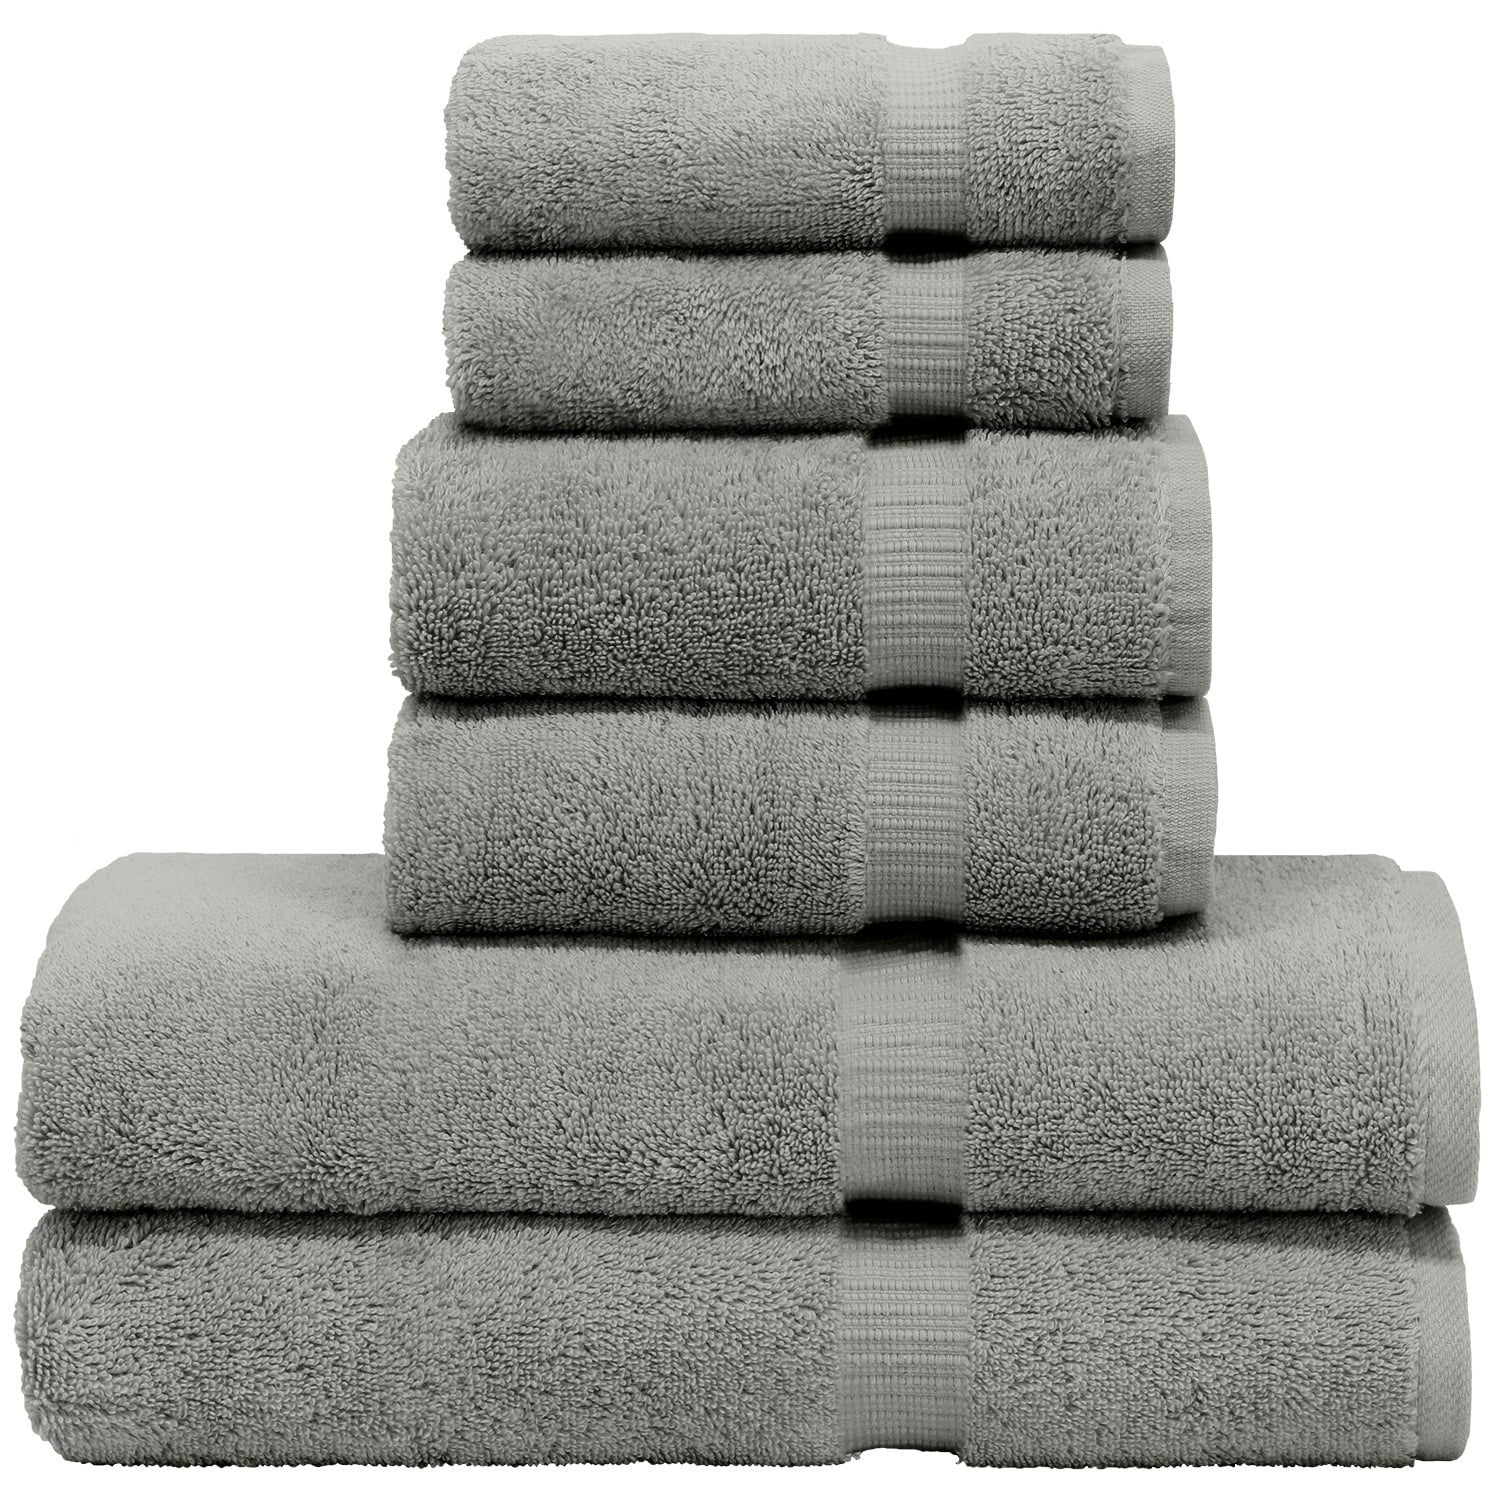 Cotton Craft Denali Luxury Dobby Border Bath Towels 30x60 100% Ring Spun  Cotton White 20Lbs/Dz 2 Dz Per Case Price Per Dz